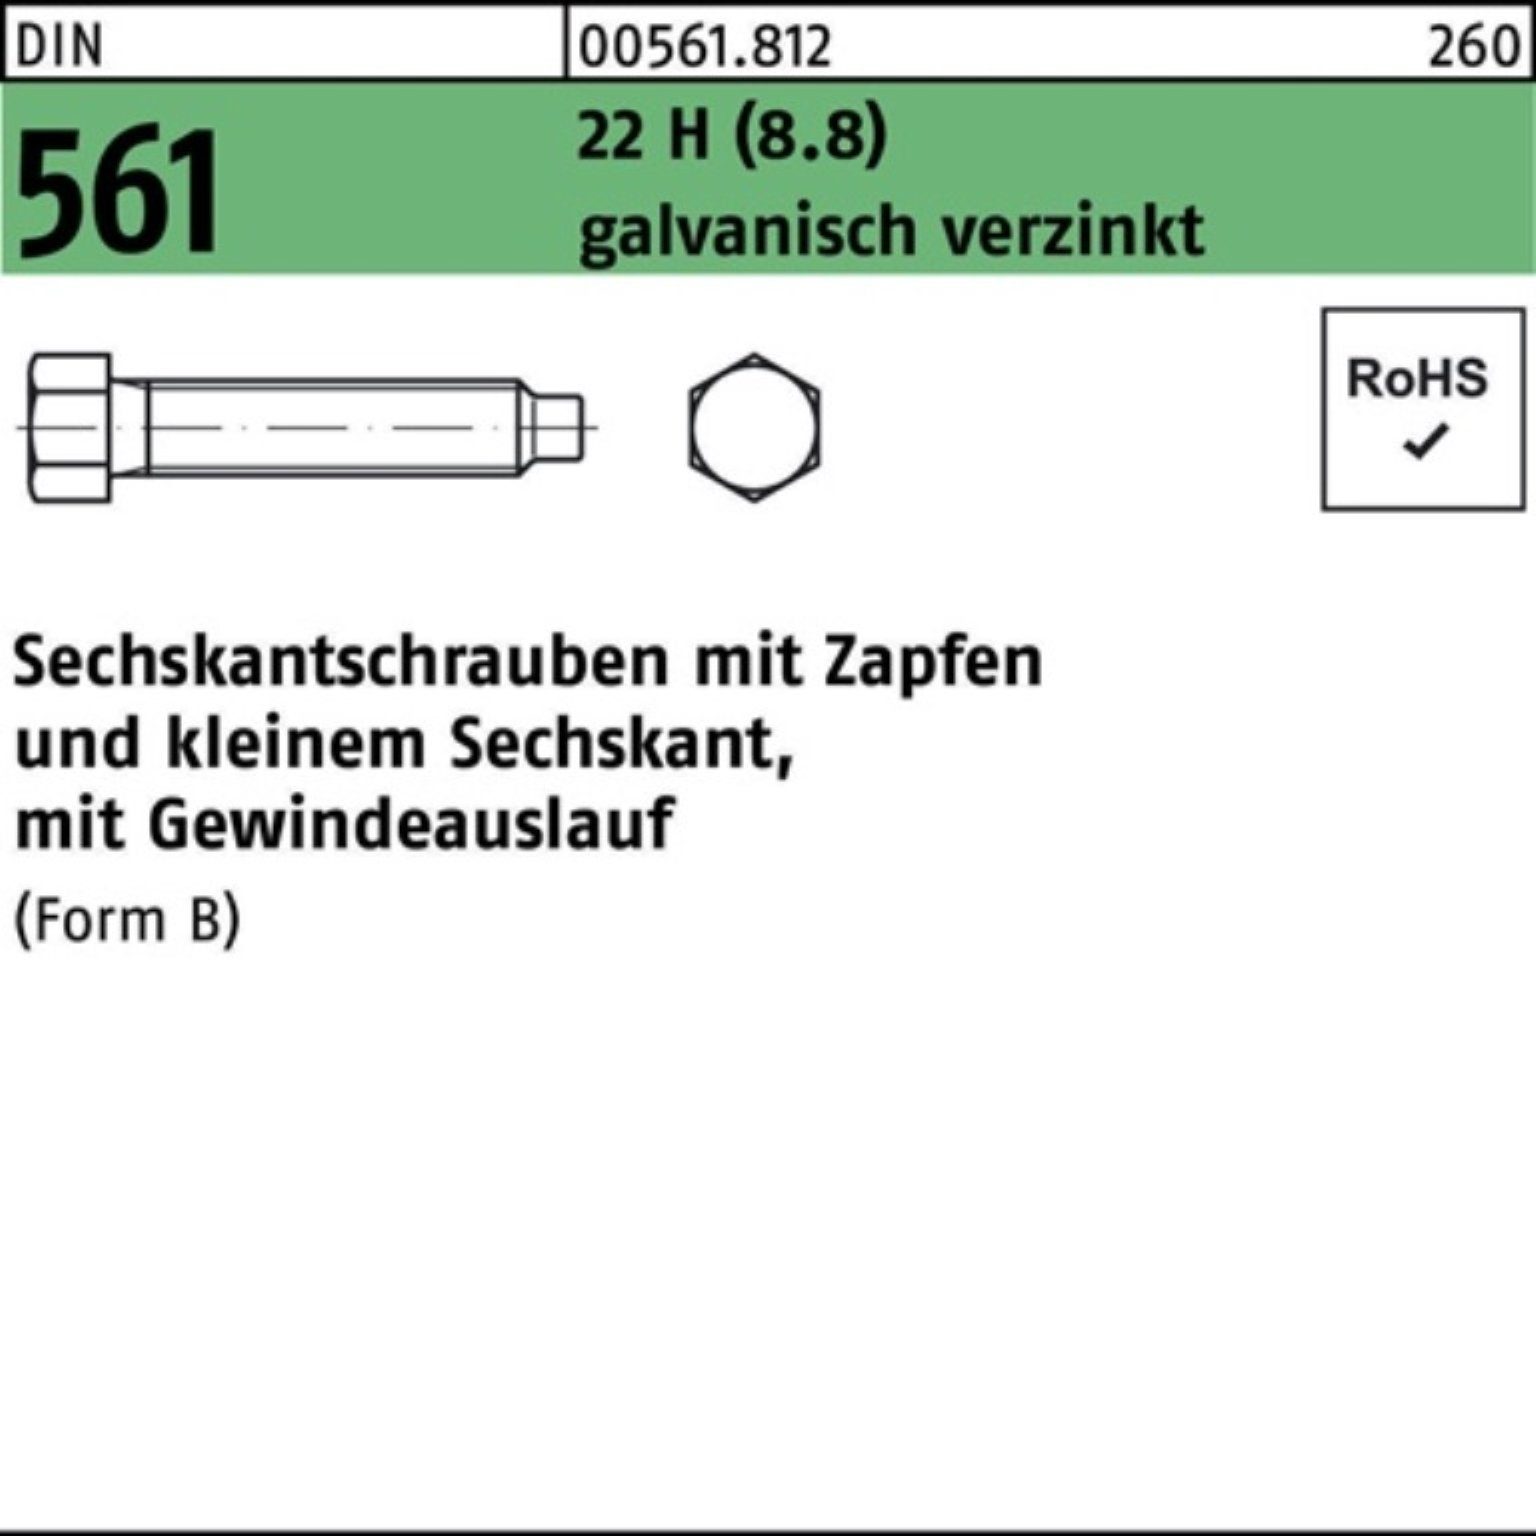 BM DIN Sechskantschraube Pack Zapfen 22 (8.8) galv.v 30x80 H Sechskantschraube 561 Reyher 100er